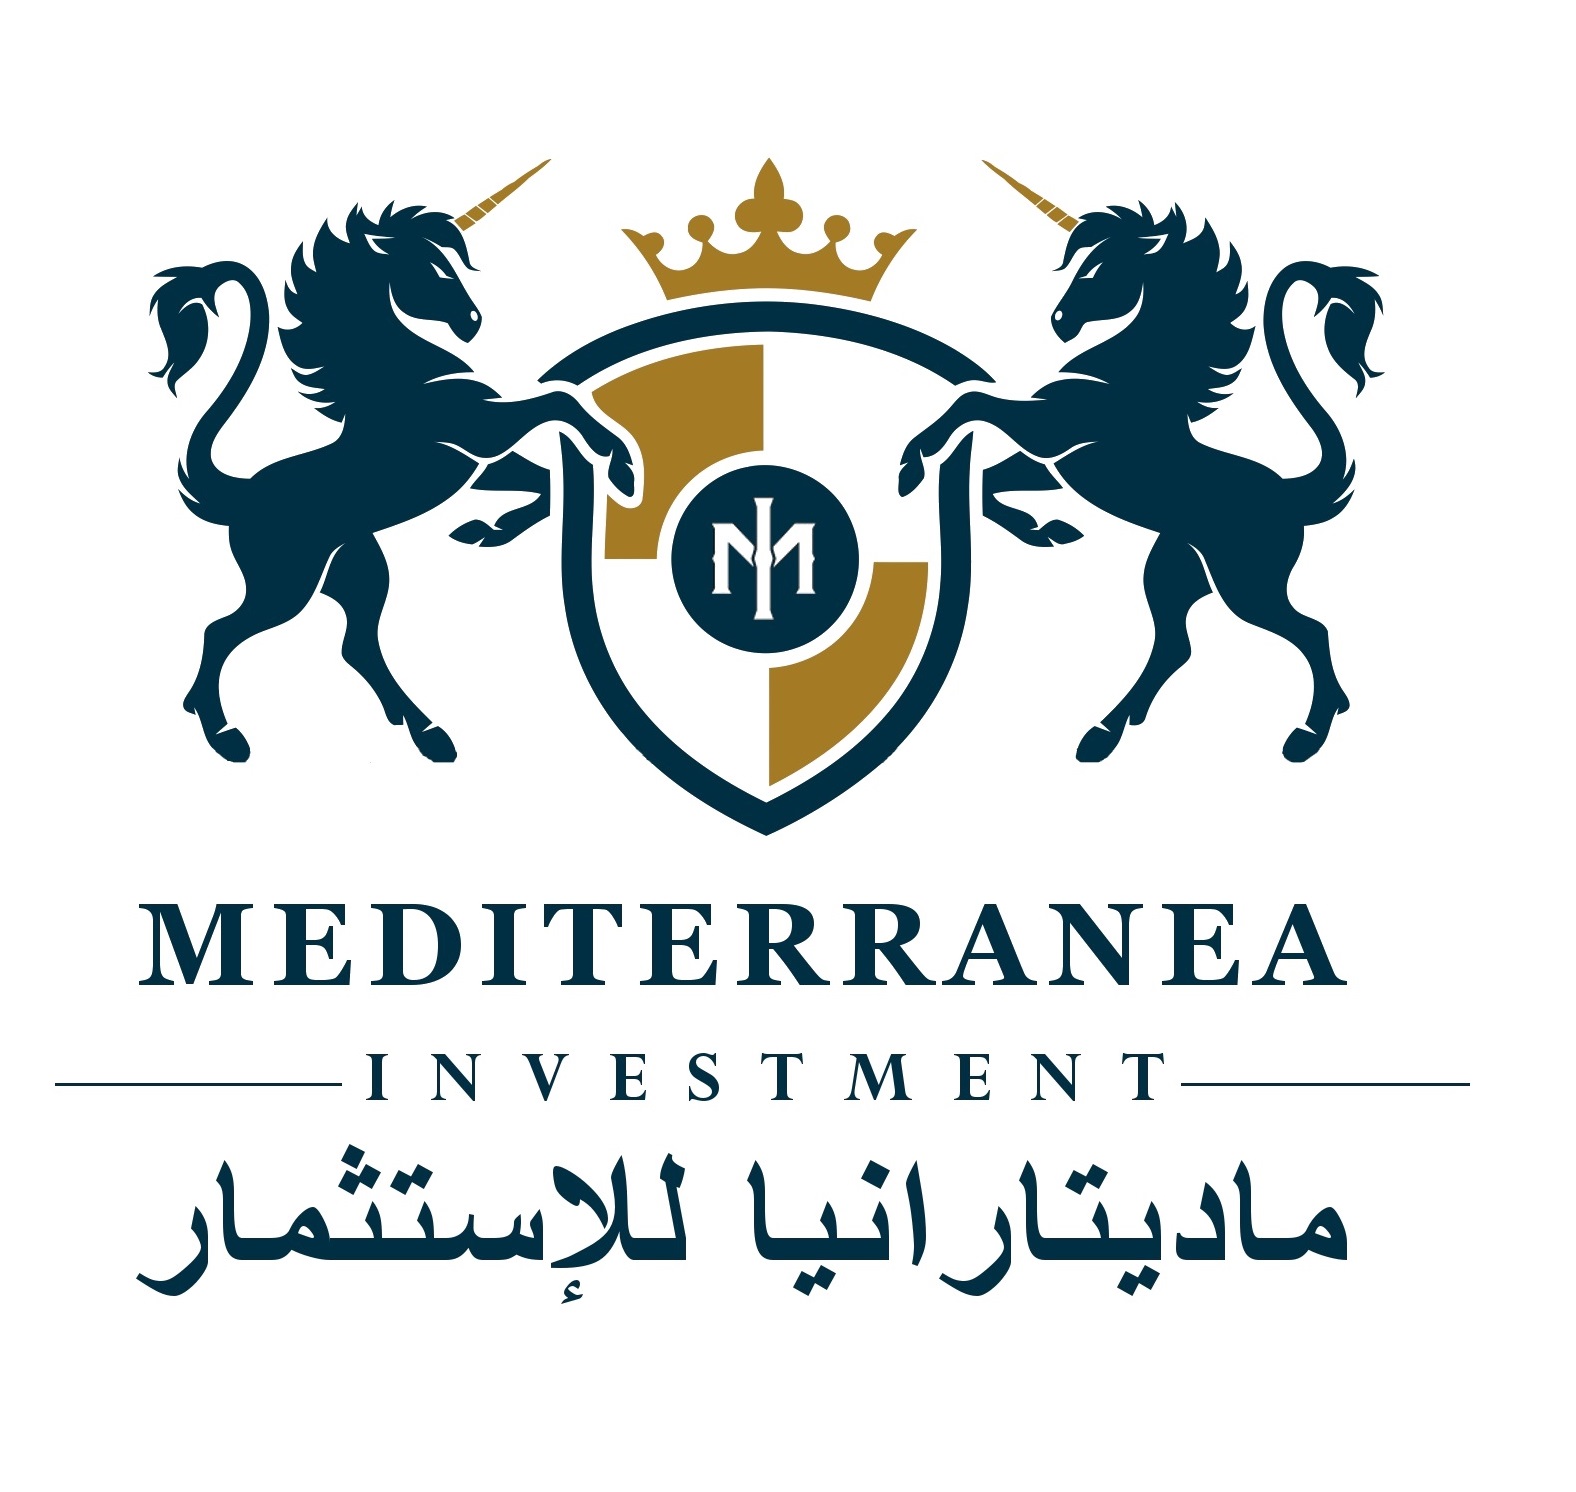 http://mediterraneainvestment.com/